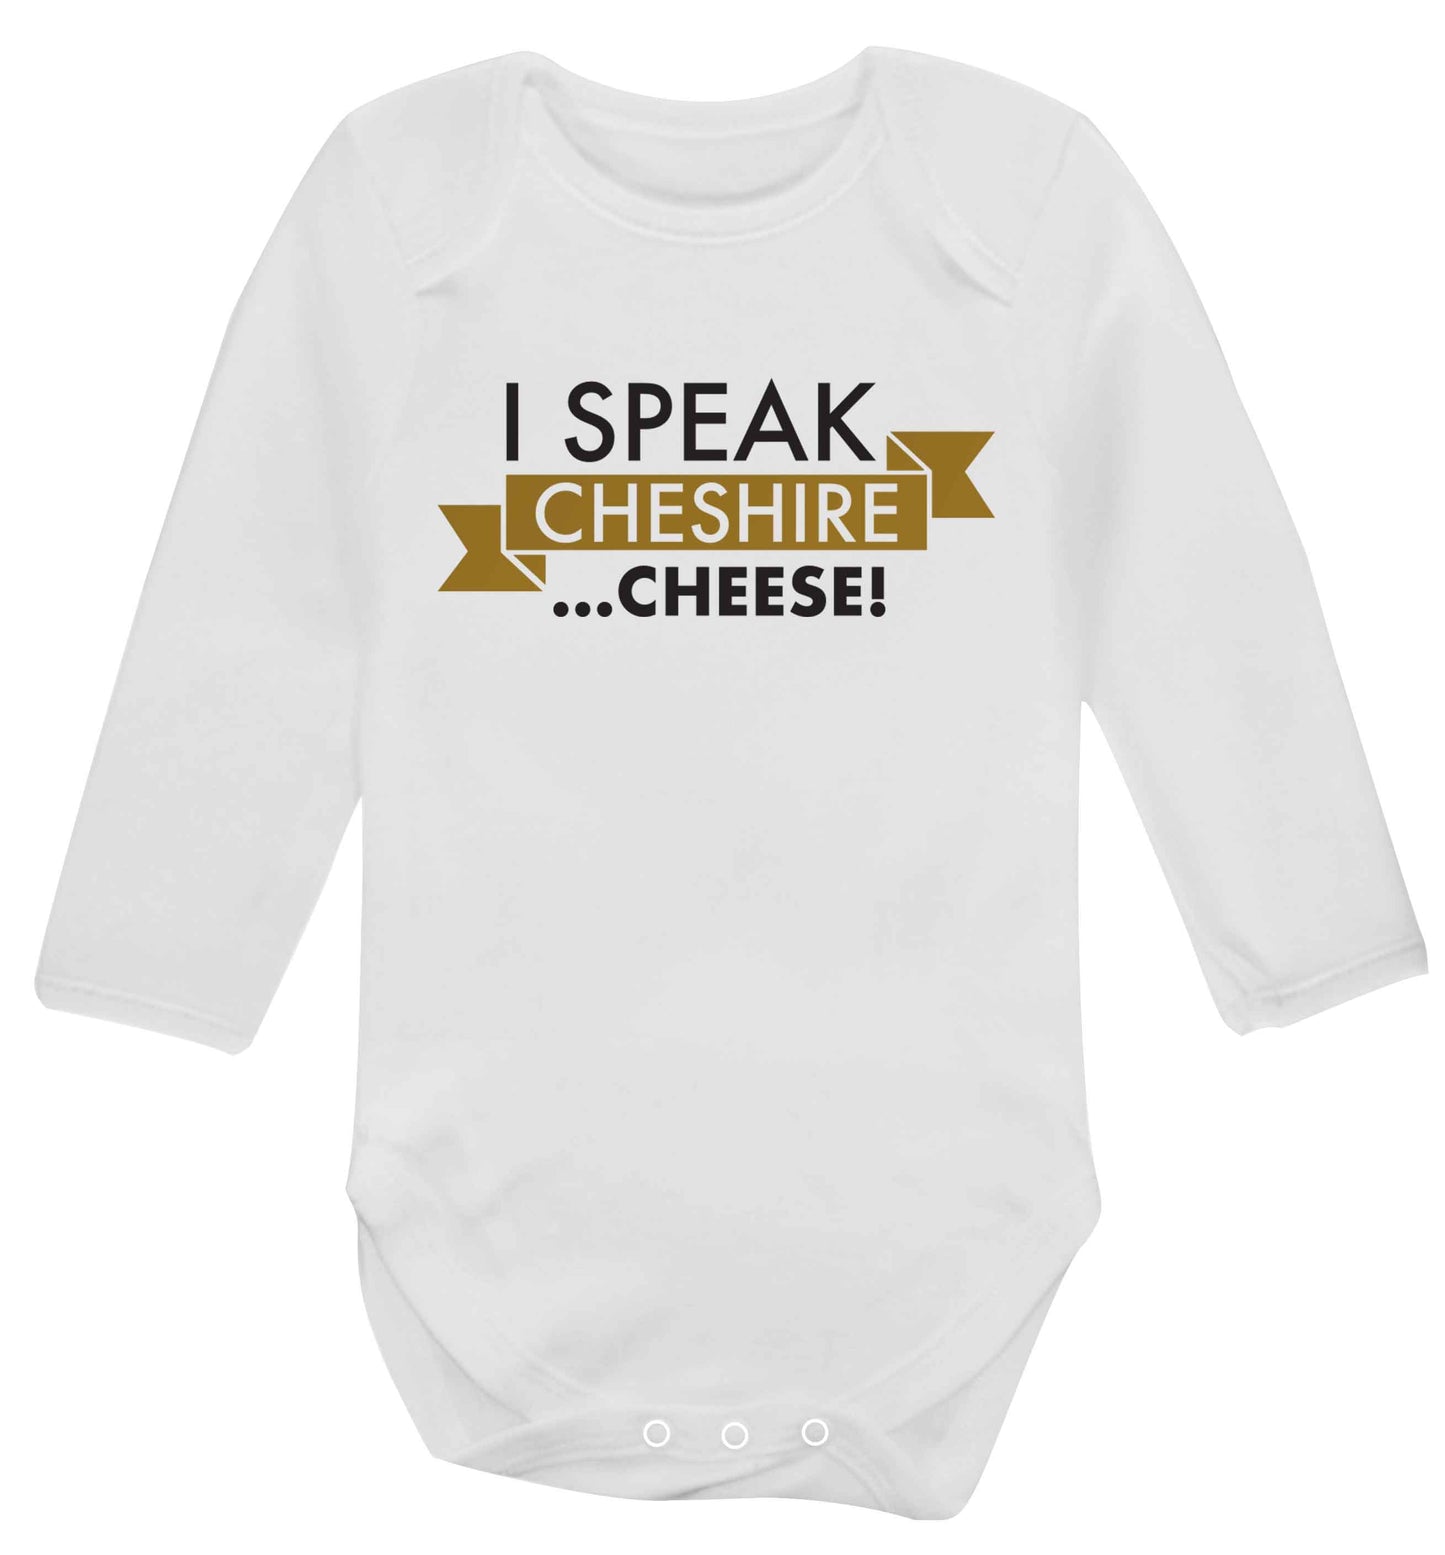 I speak Cheshire cheese Baby Vest long sleeved white 6-12 months